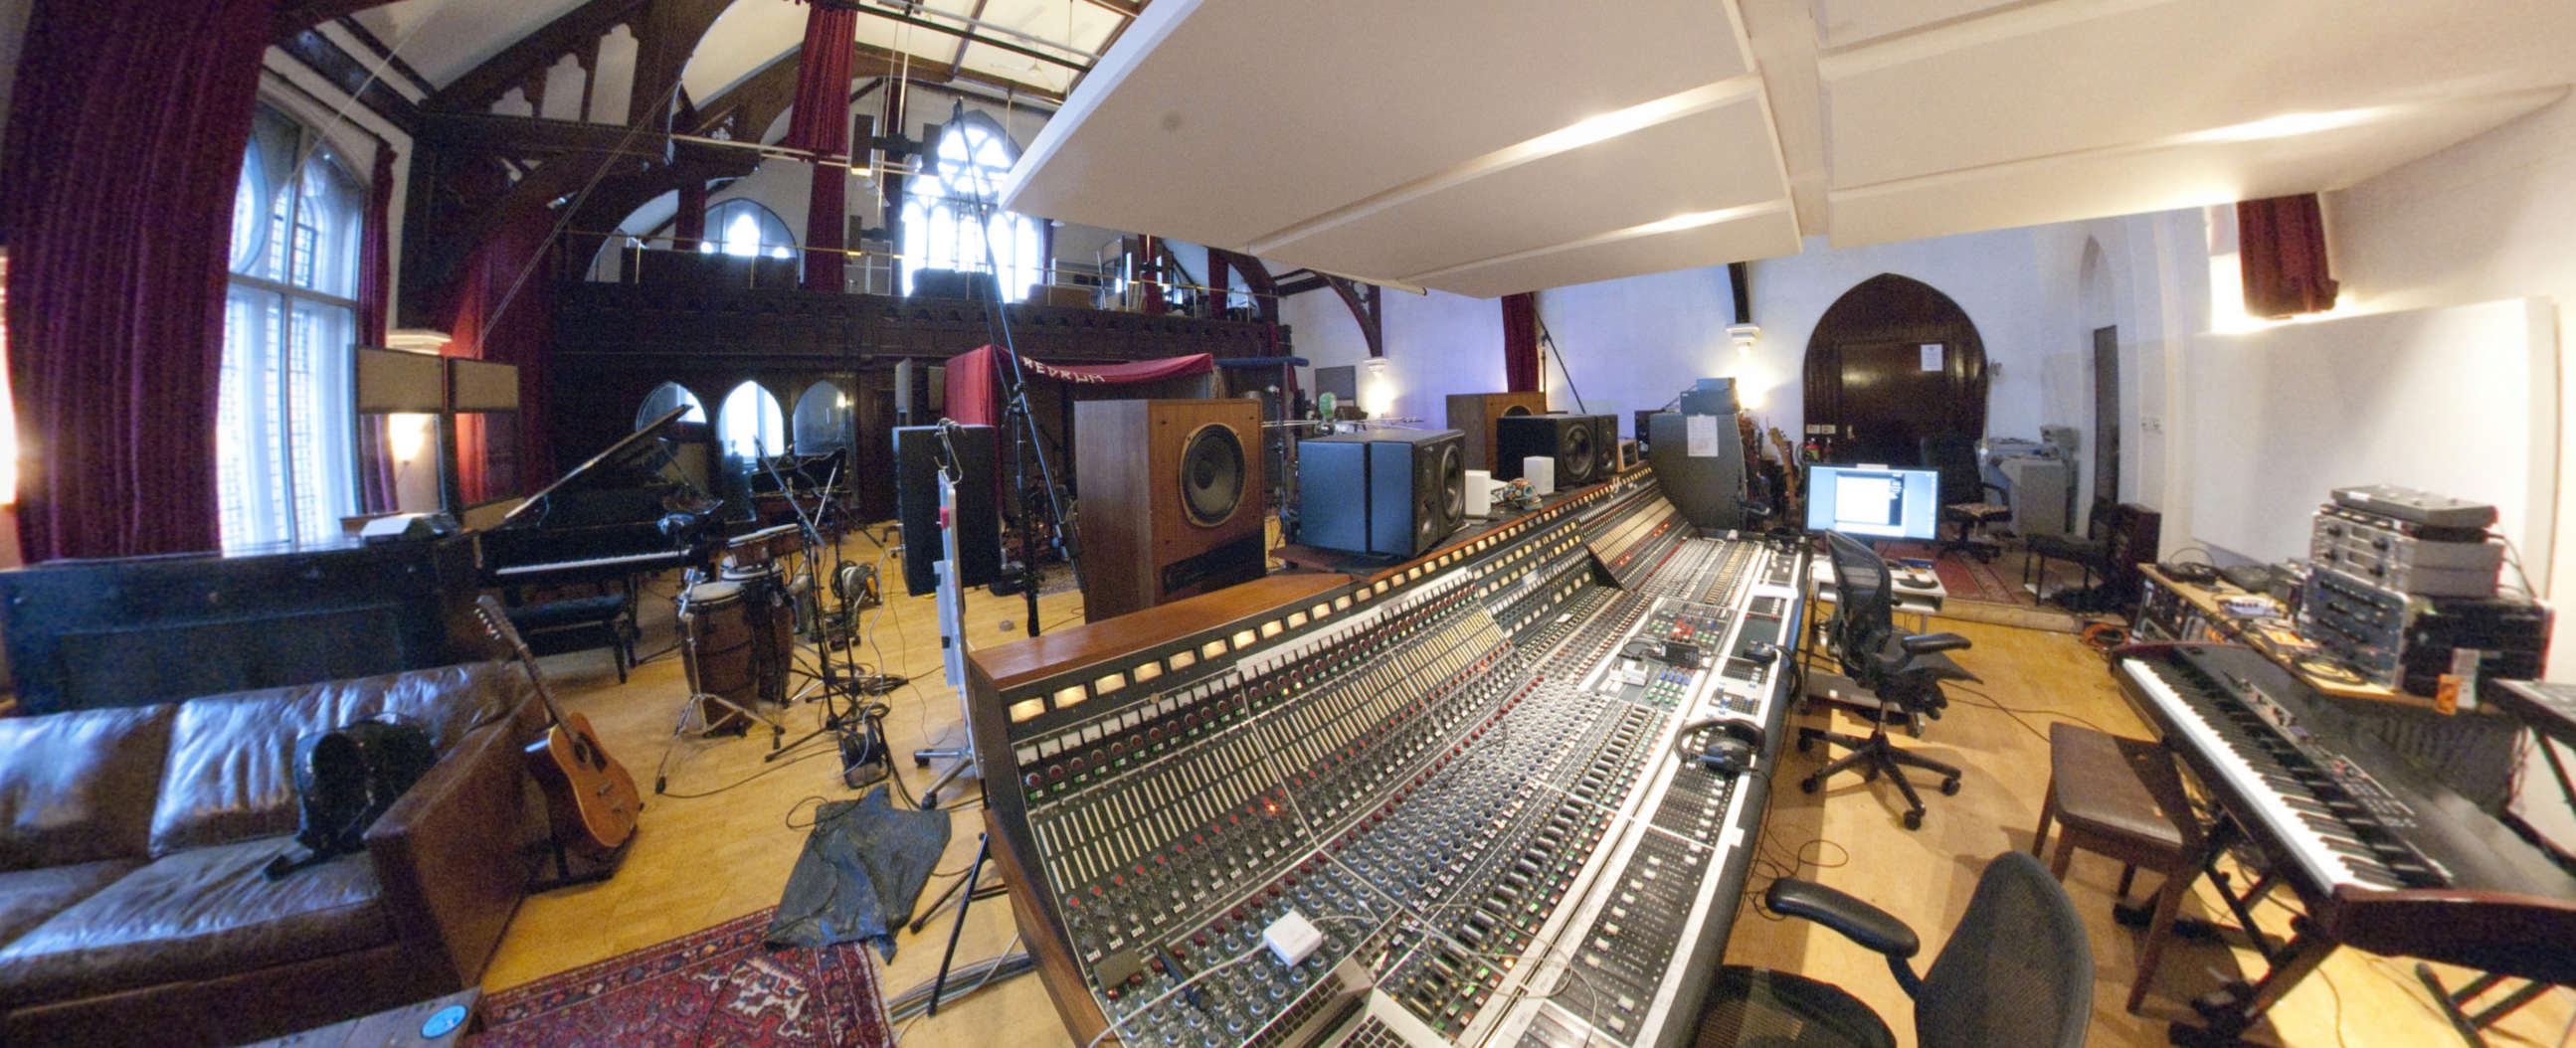 The Church Studio, London, UK